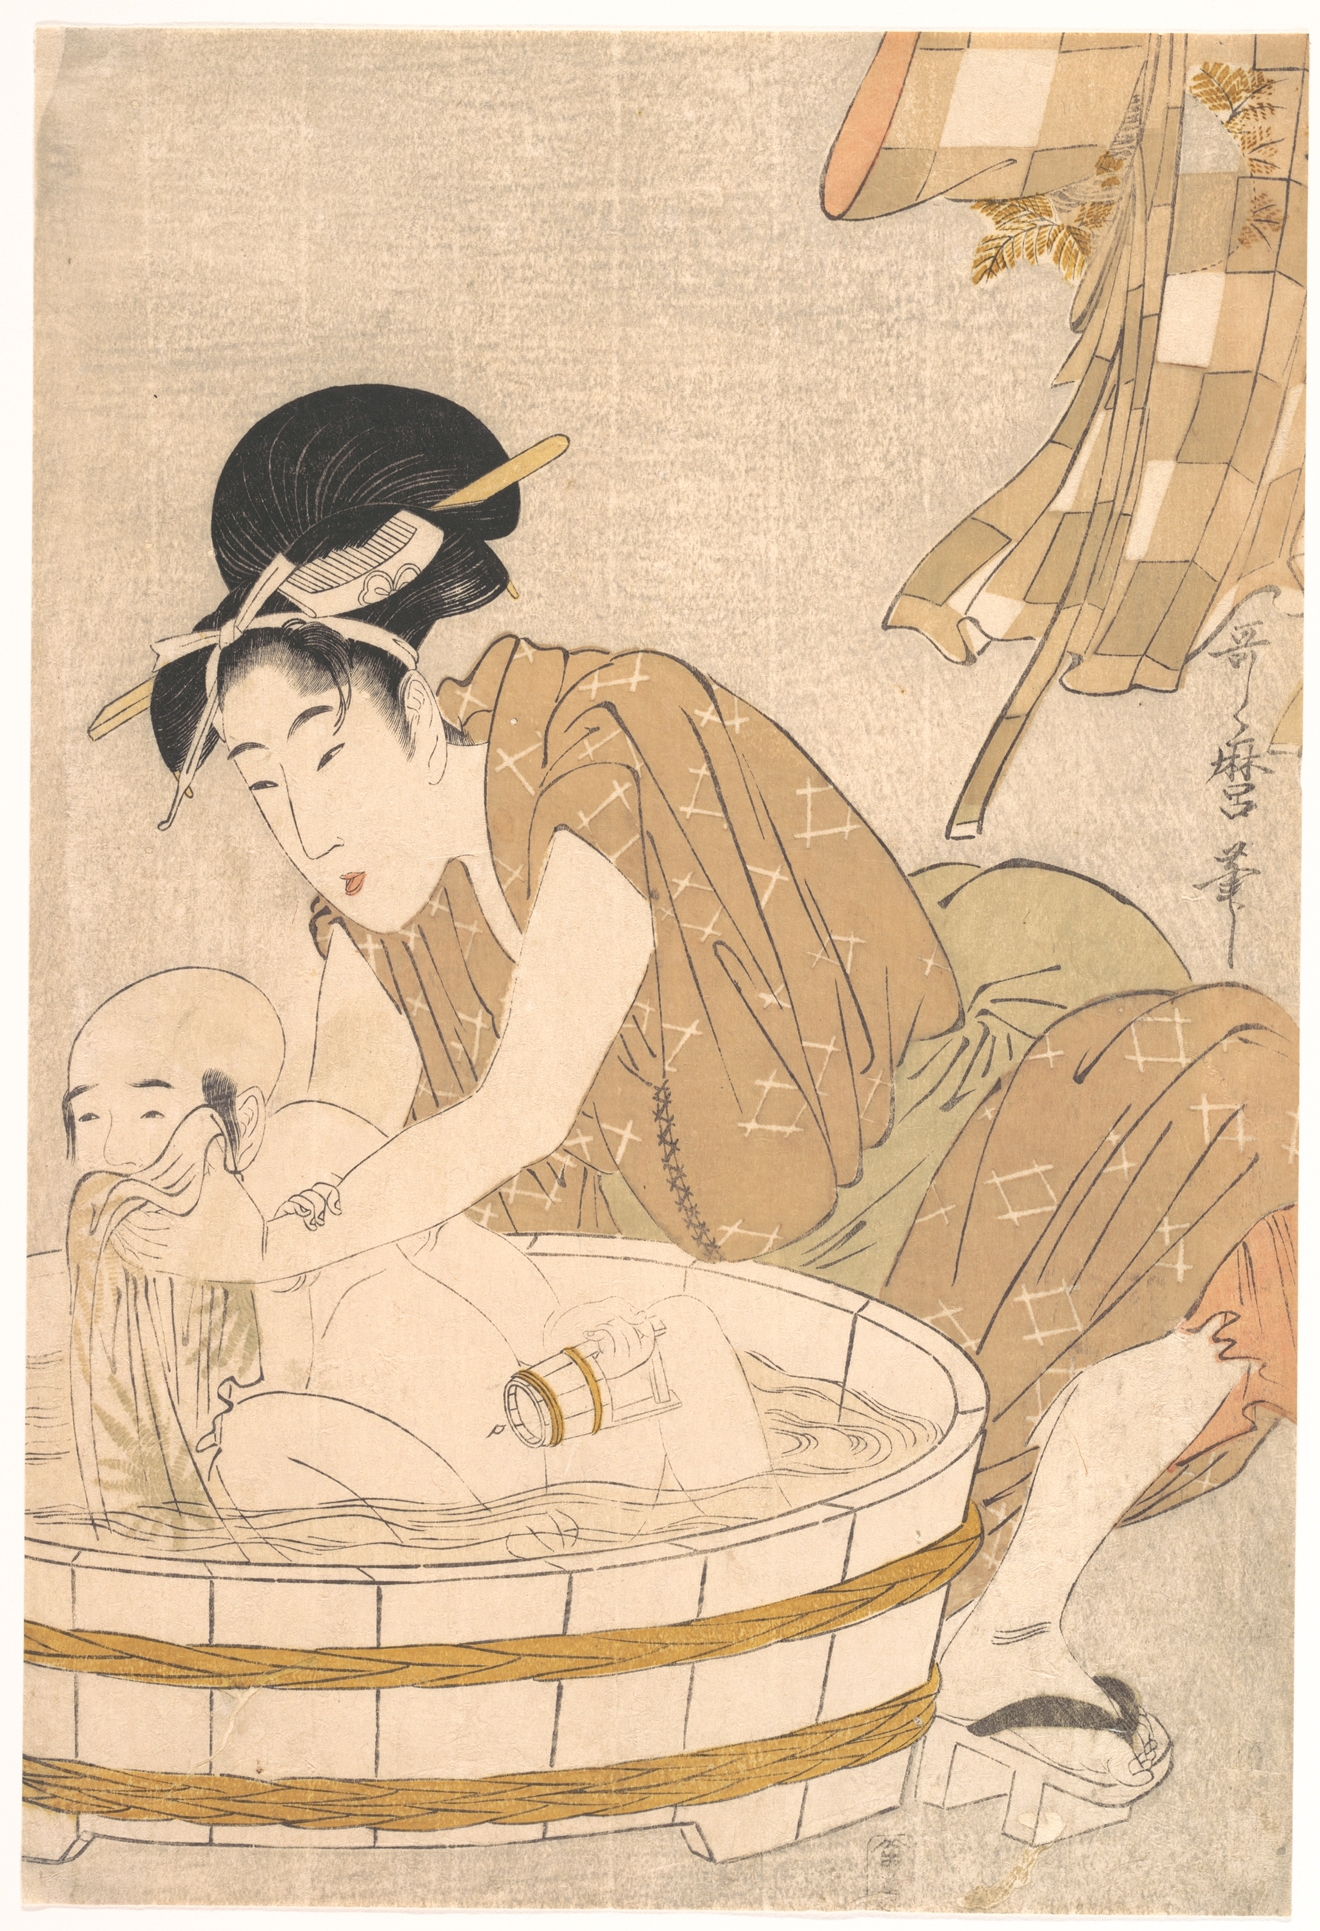 Il bagno by Kitagawa Utamaro - 1801 circa - 37,3 x 25,1 cm 